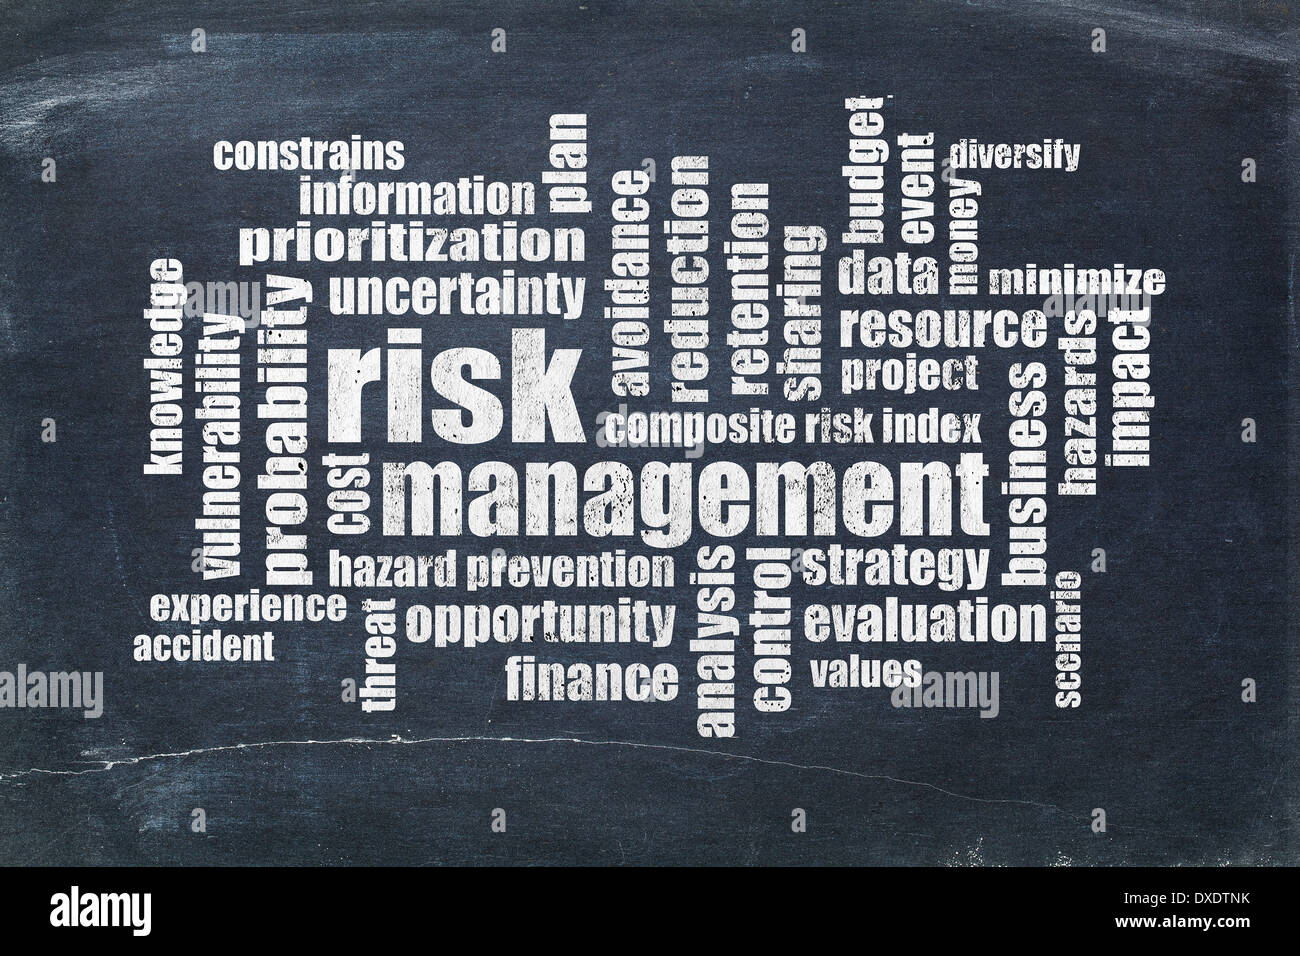 risk management word cloud on a slate blackboard Stock Photo